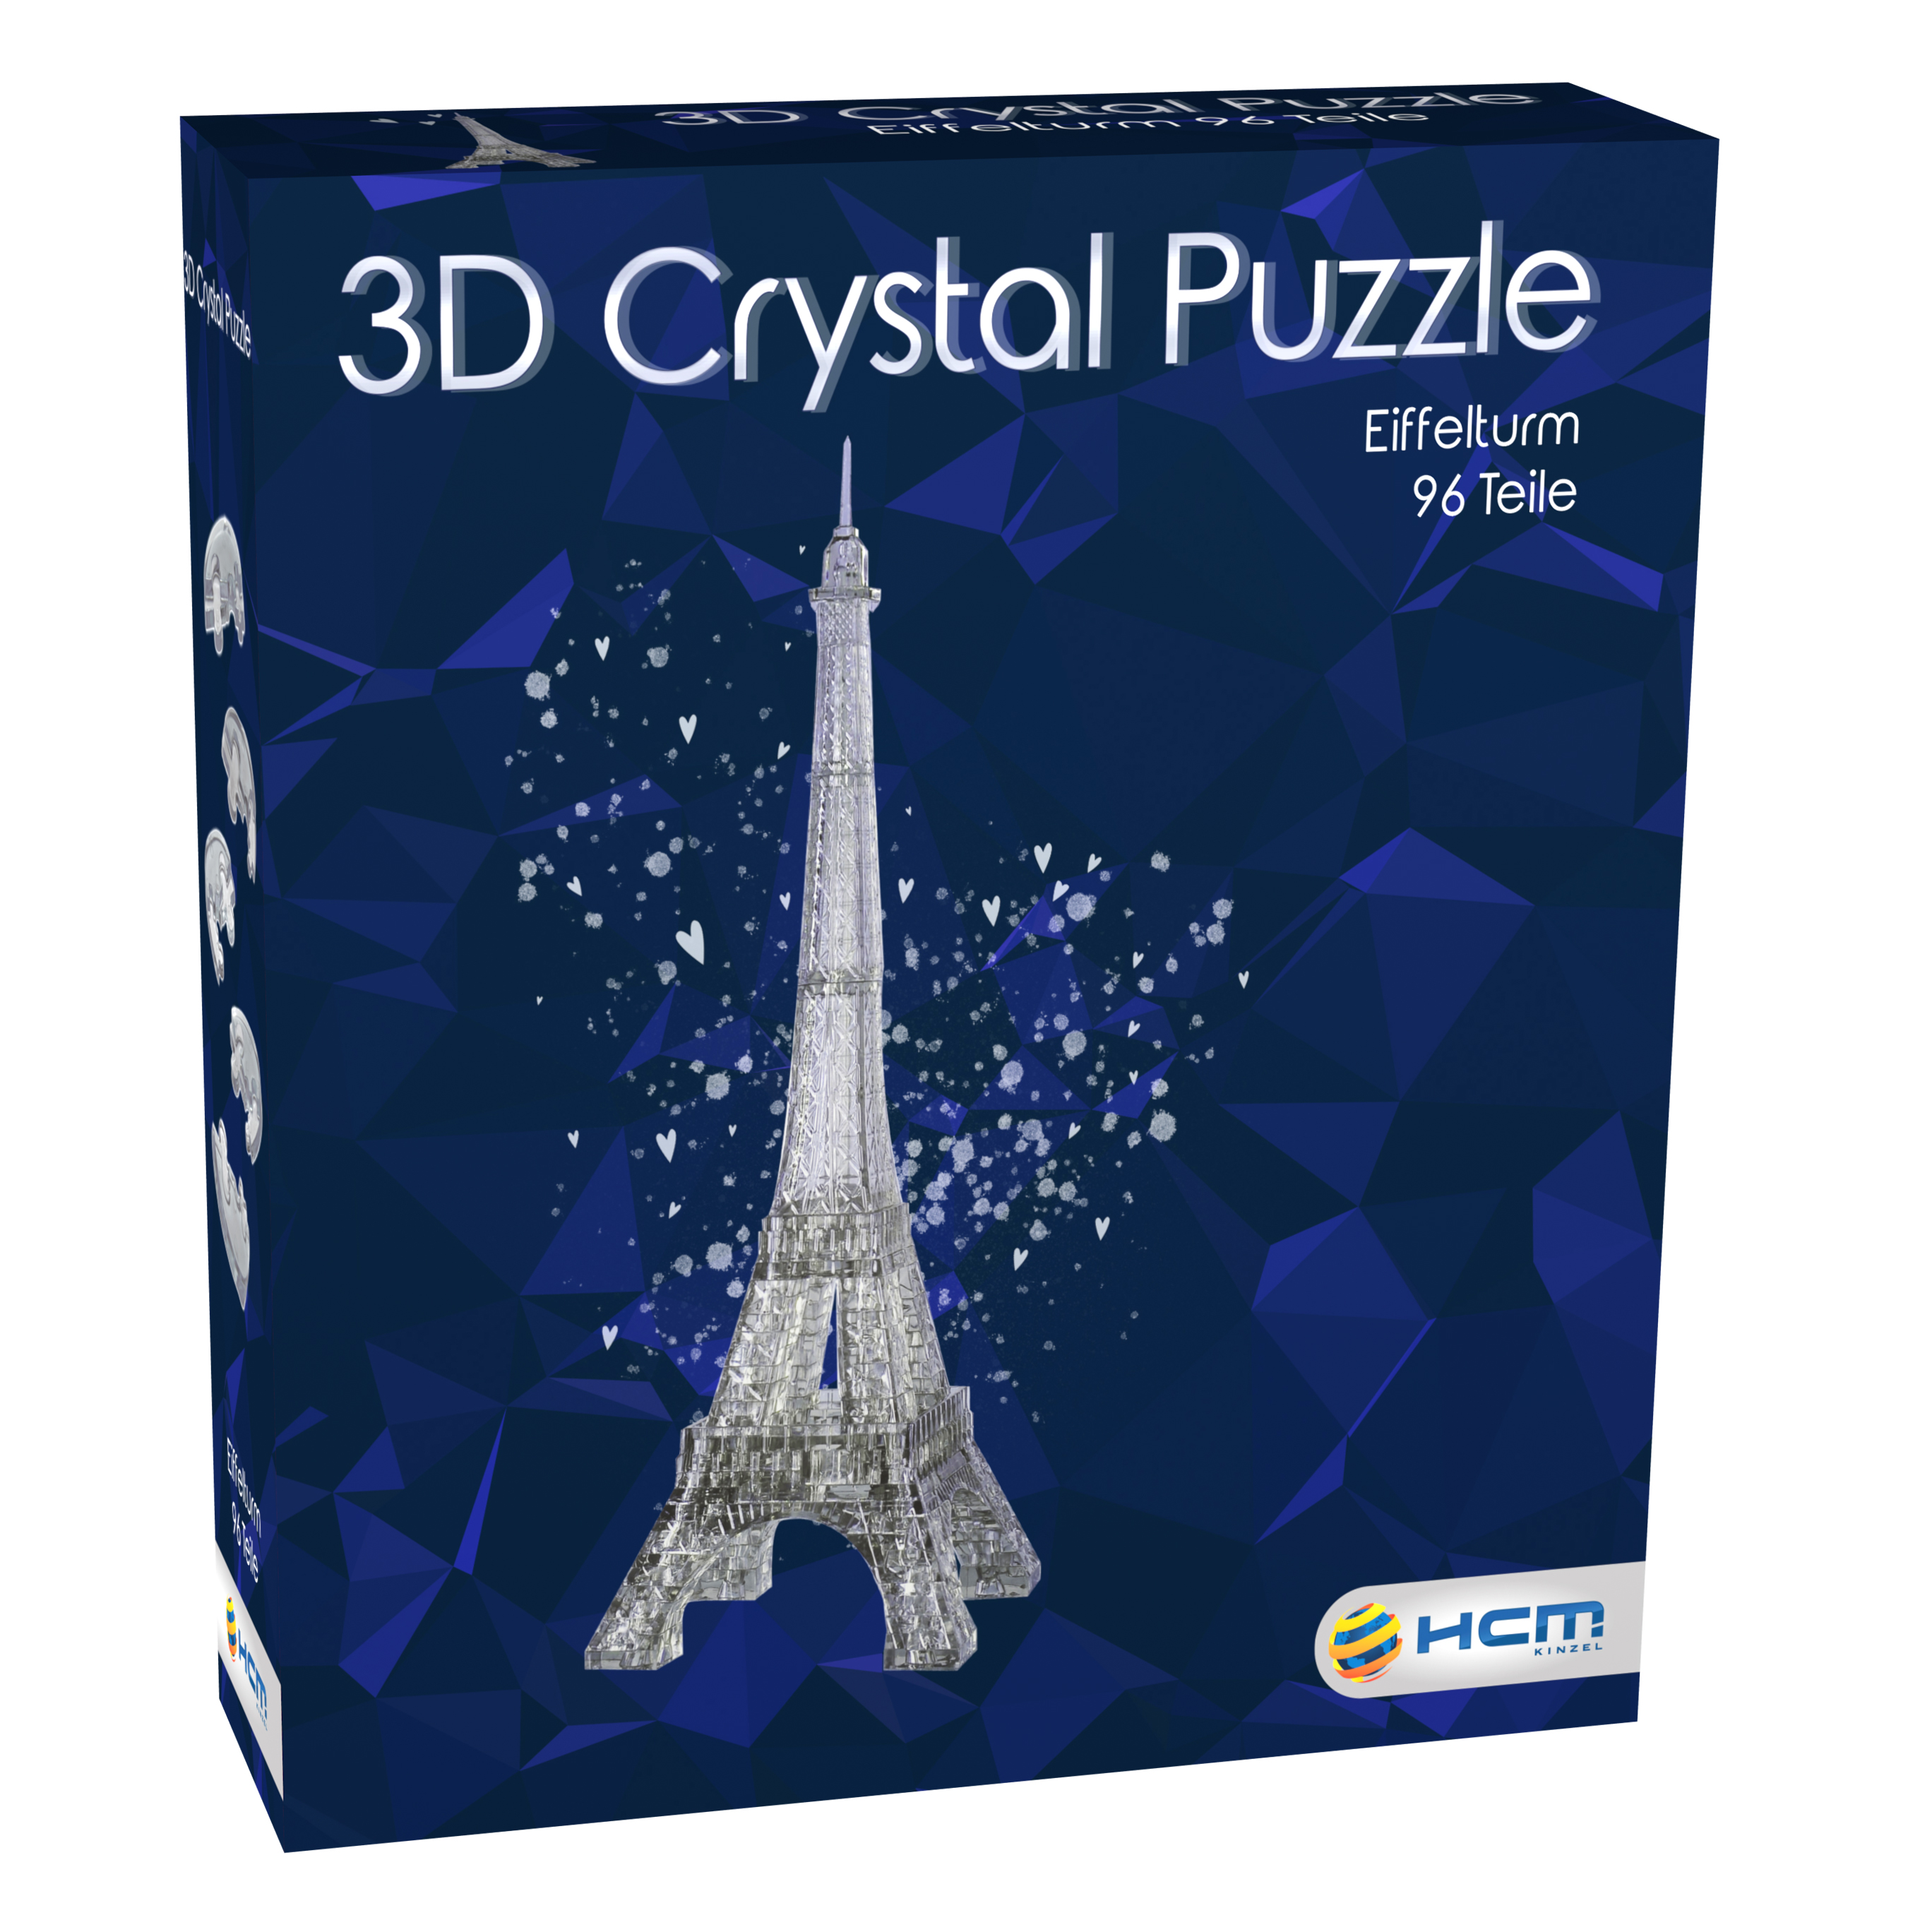 Eiffelturm 96 Teile 3D Crystal Puzzle 